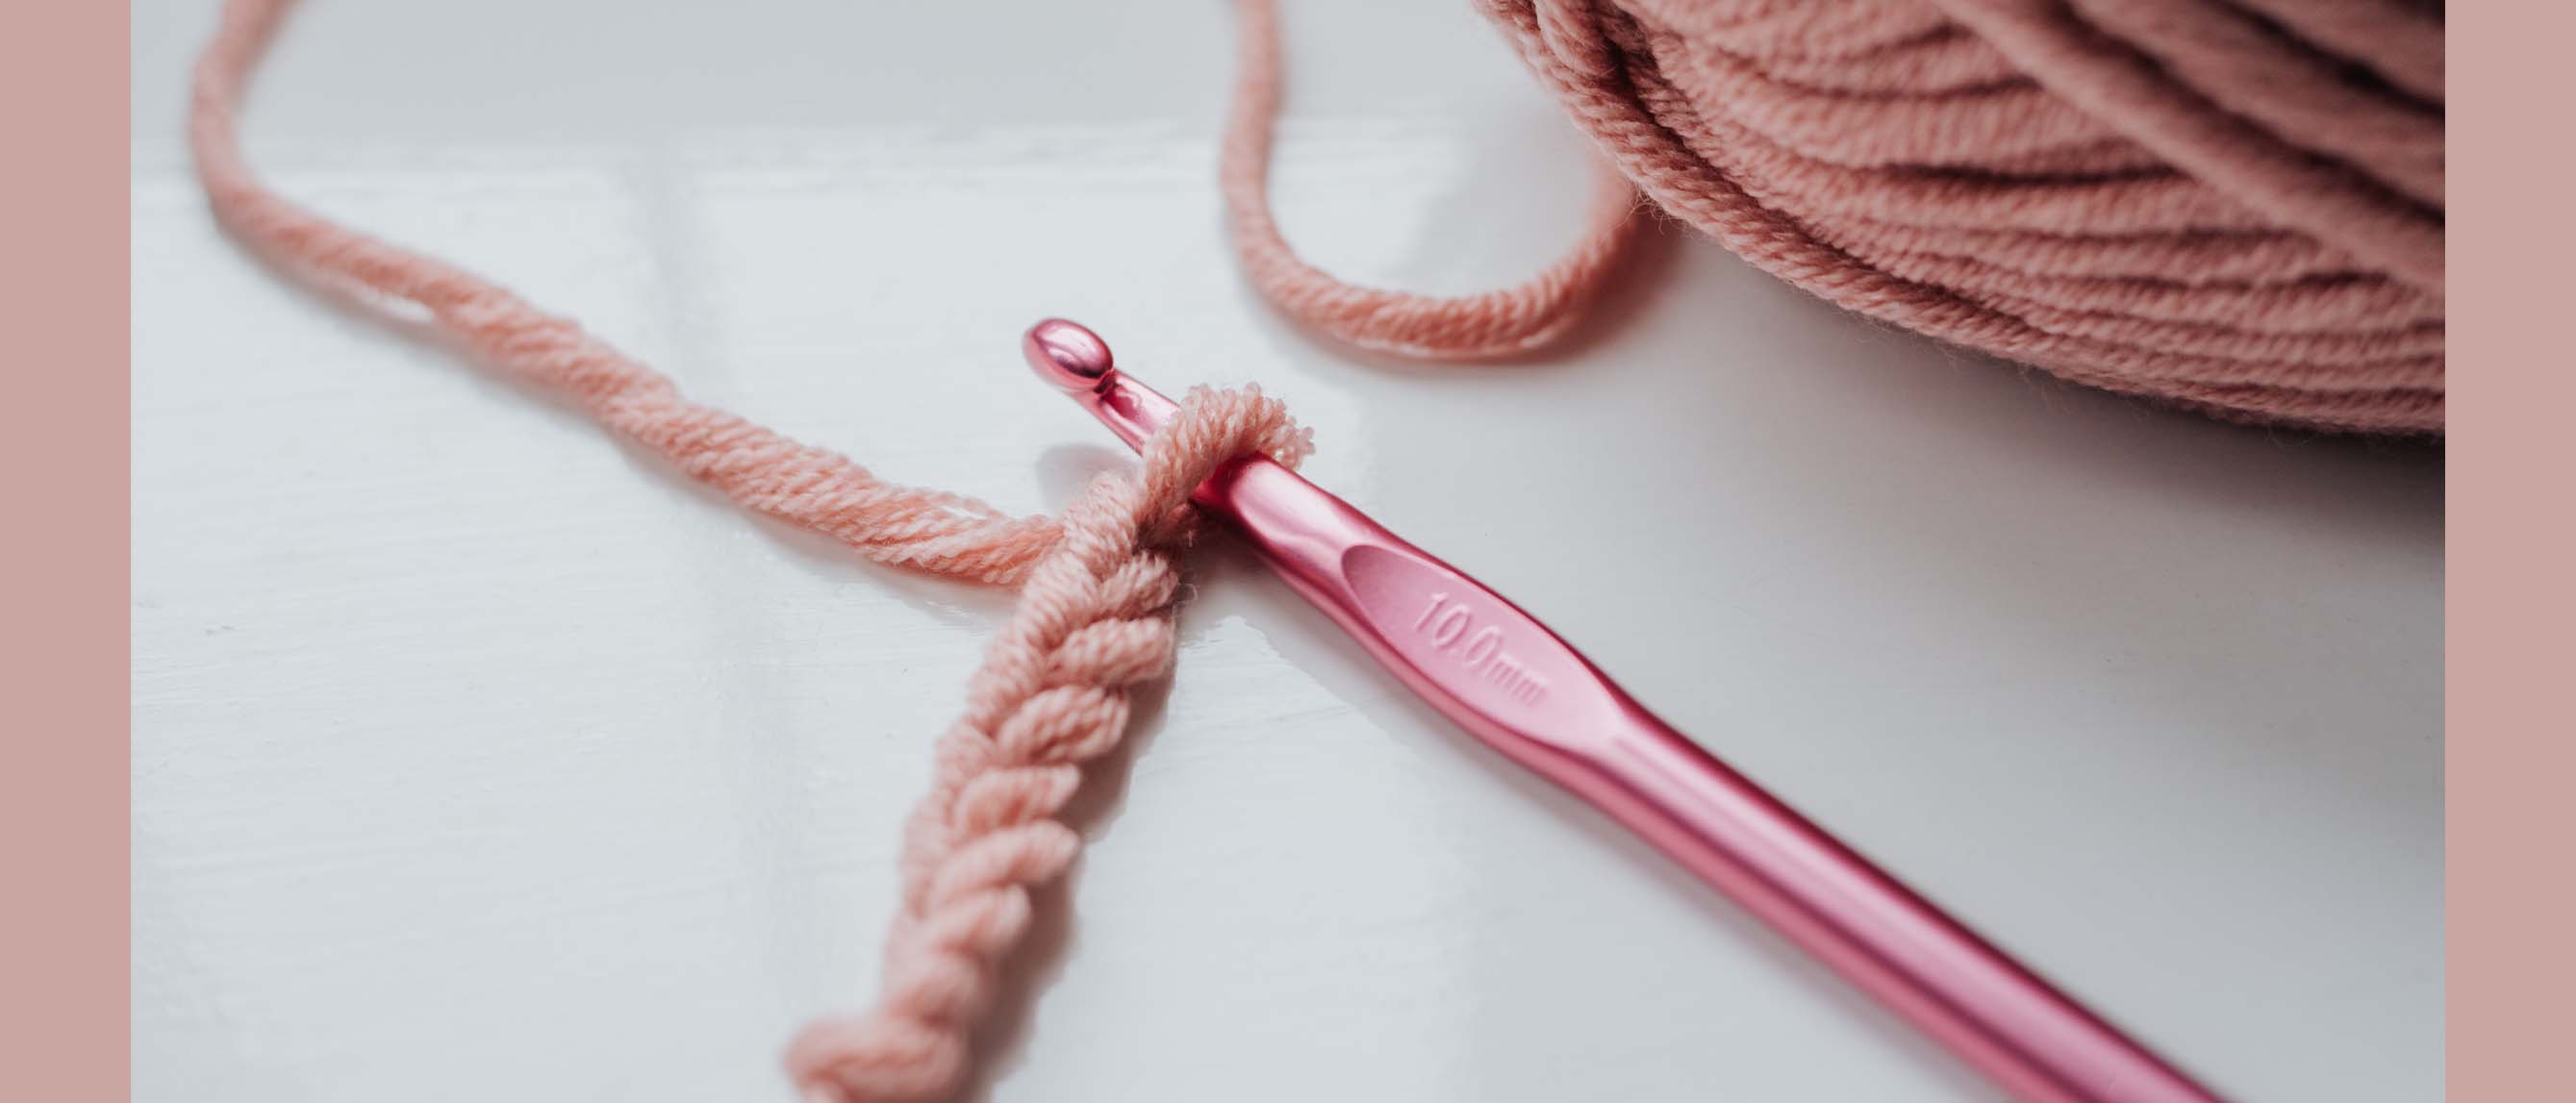 Hooked on crochet? Here's 15 of the best crochet hooks and where